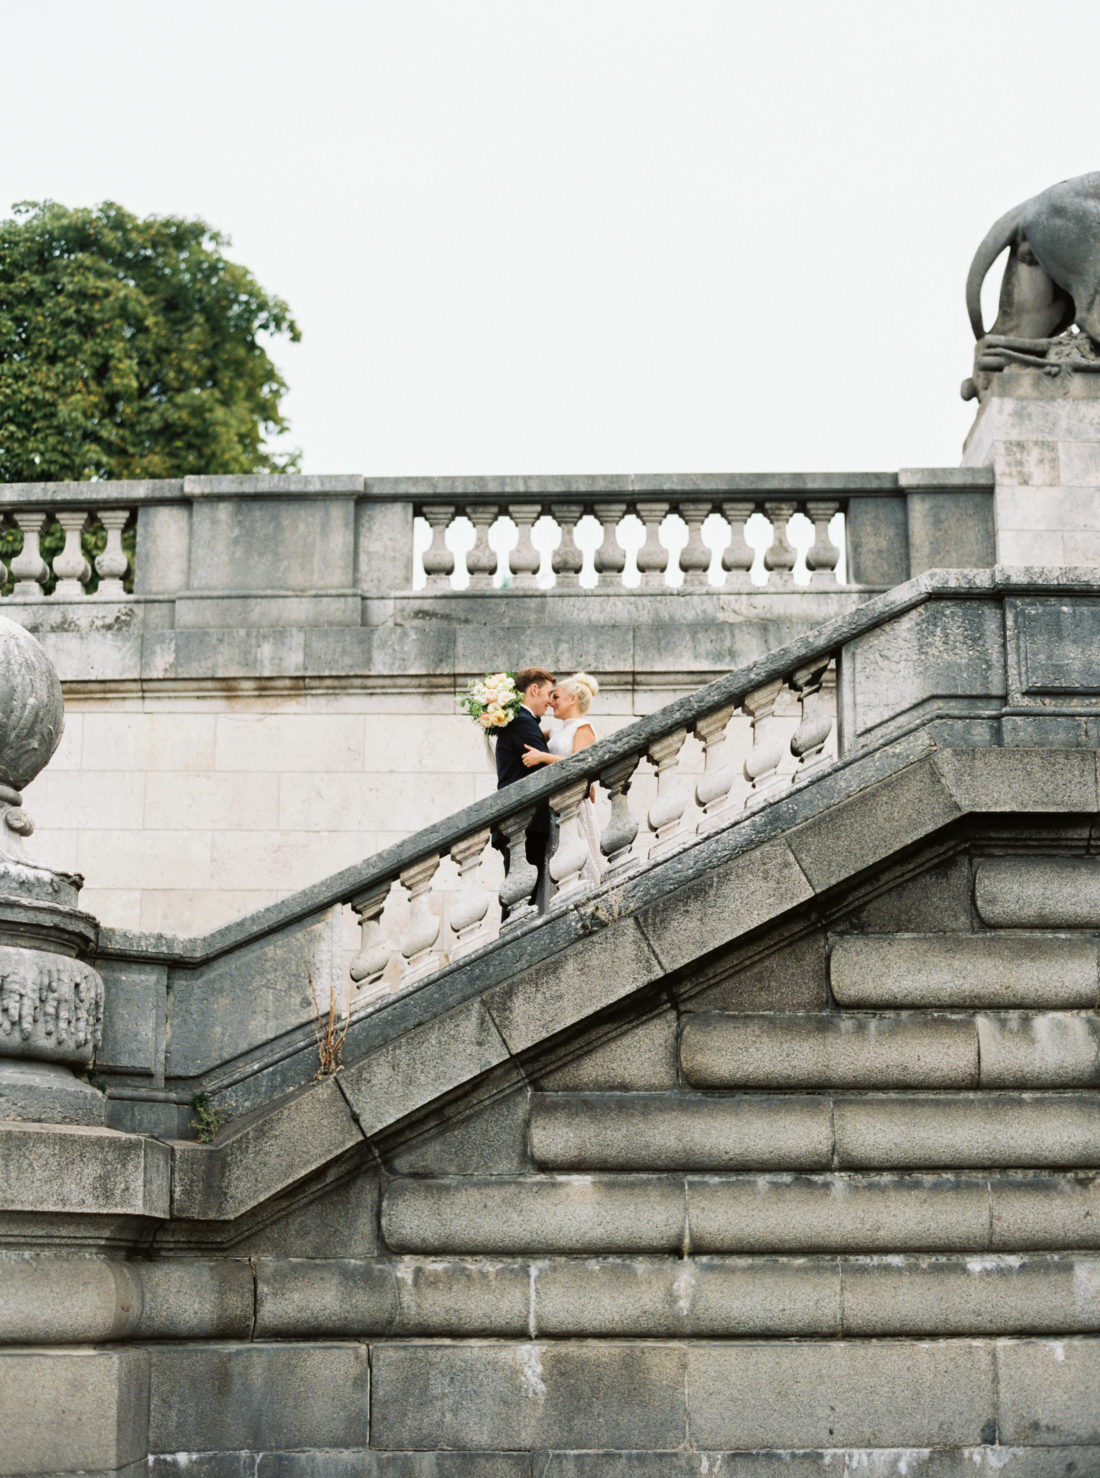 paris wedding planner rachael ellen events tips post photo 2